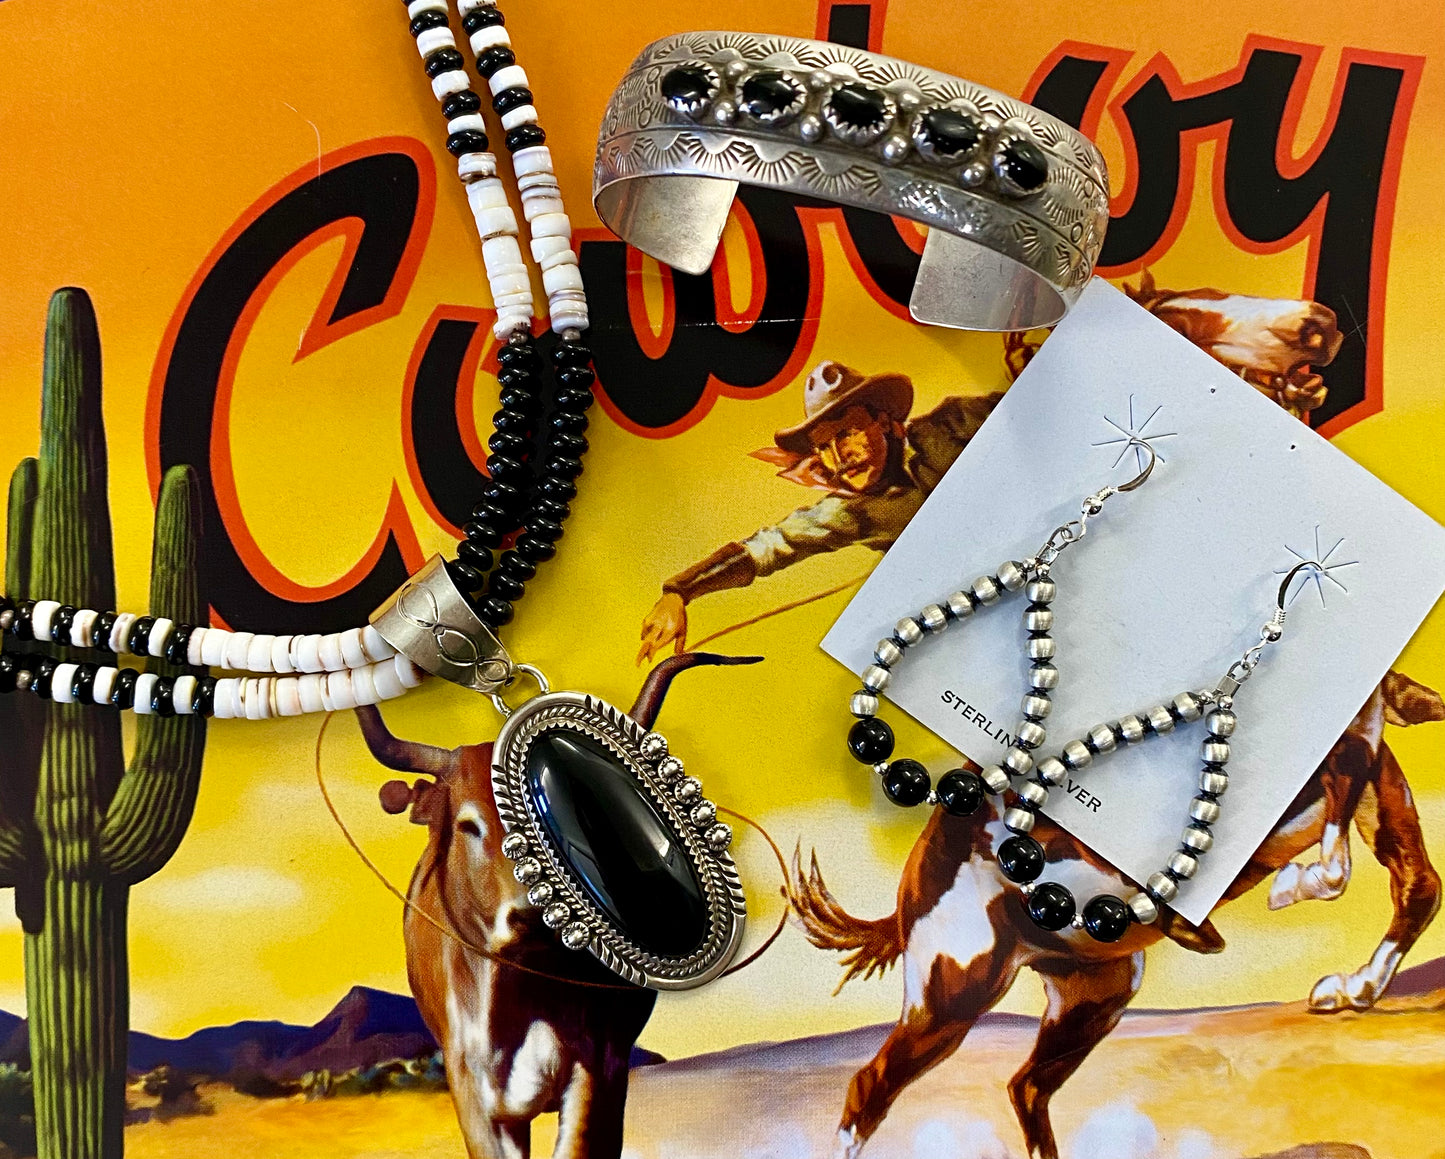 The Josephine Black Onyx & Navajo Pearl Earrings